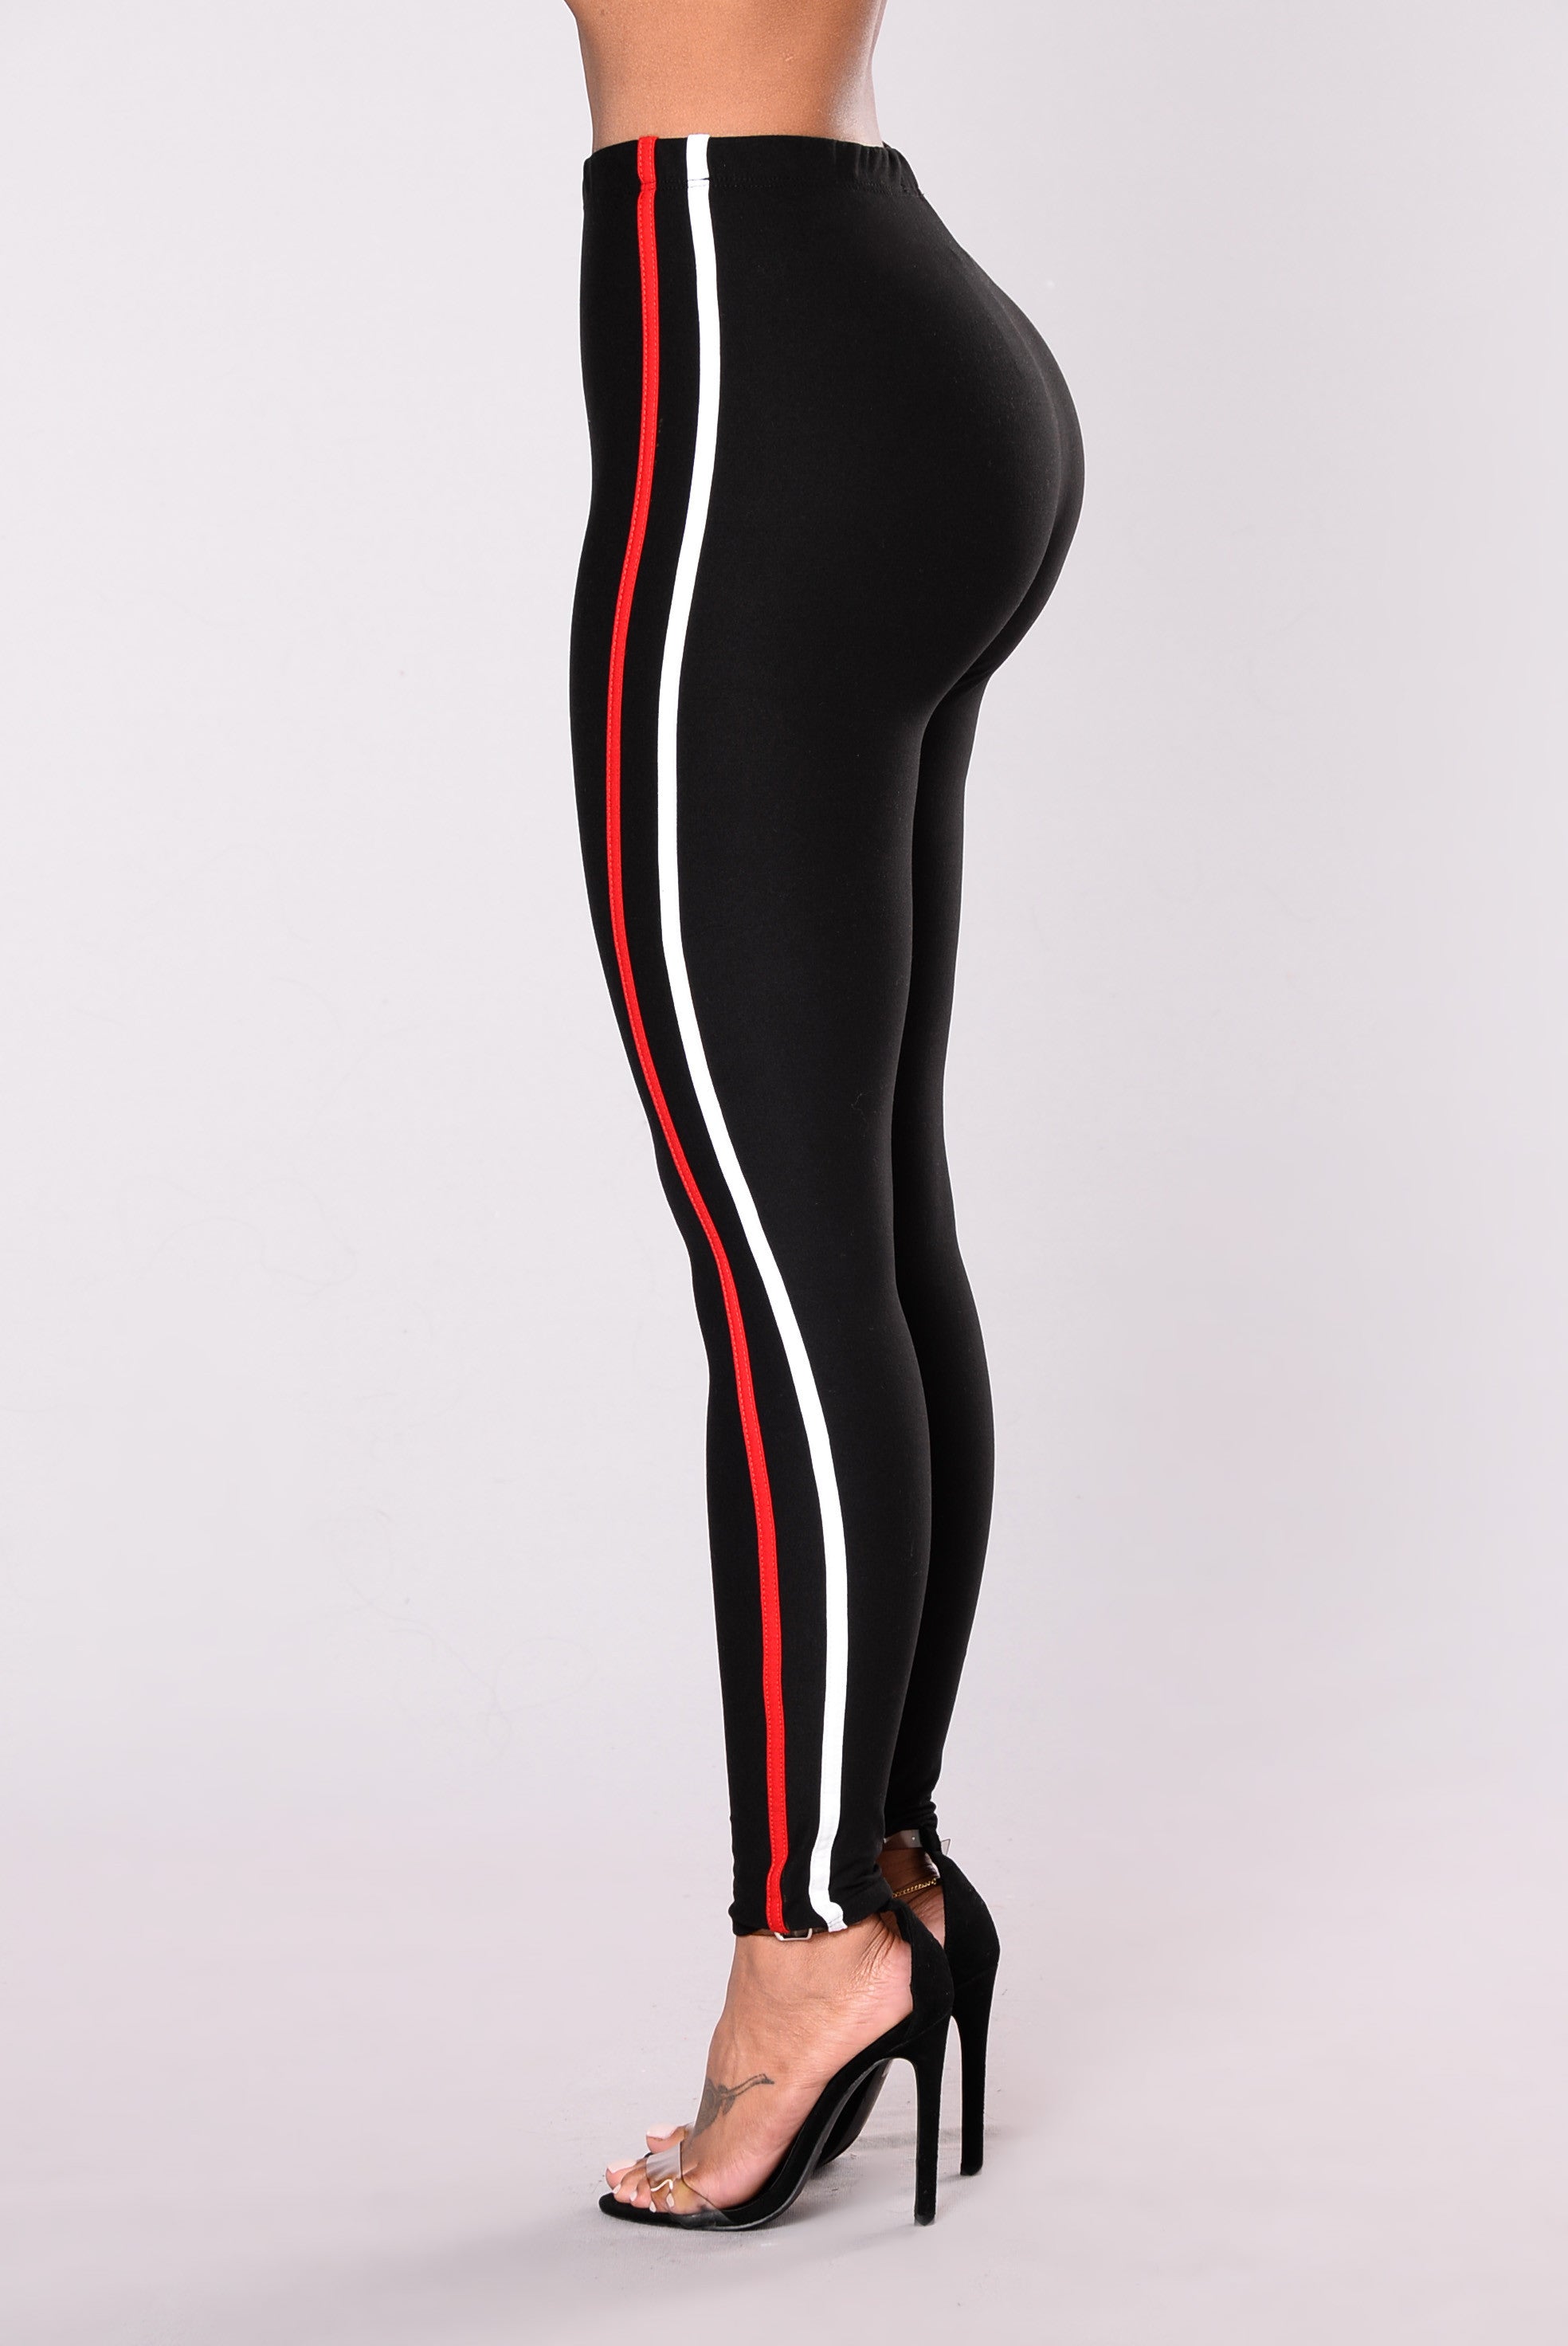 Red White Striped Leggings, Red Stripe Leggings, Stretch Pants, Yoga Pants, Stripes  Leggings -  Canada